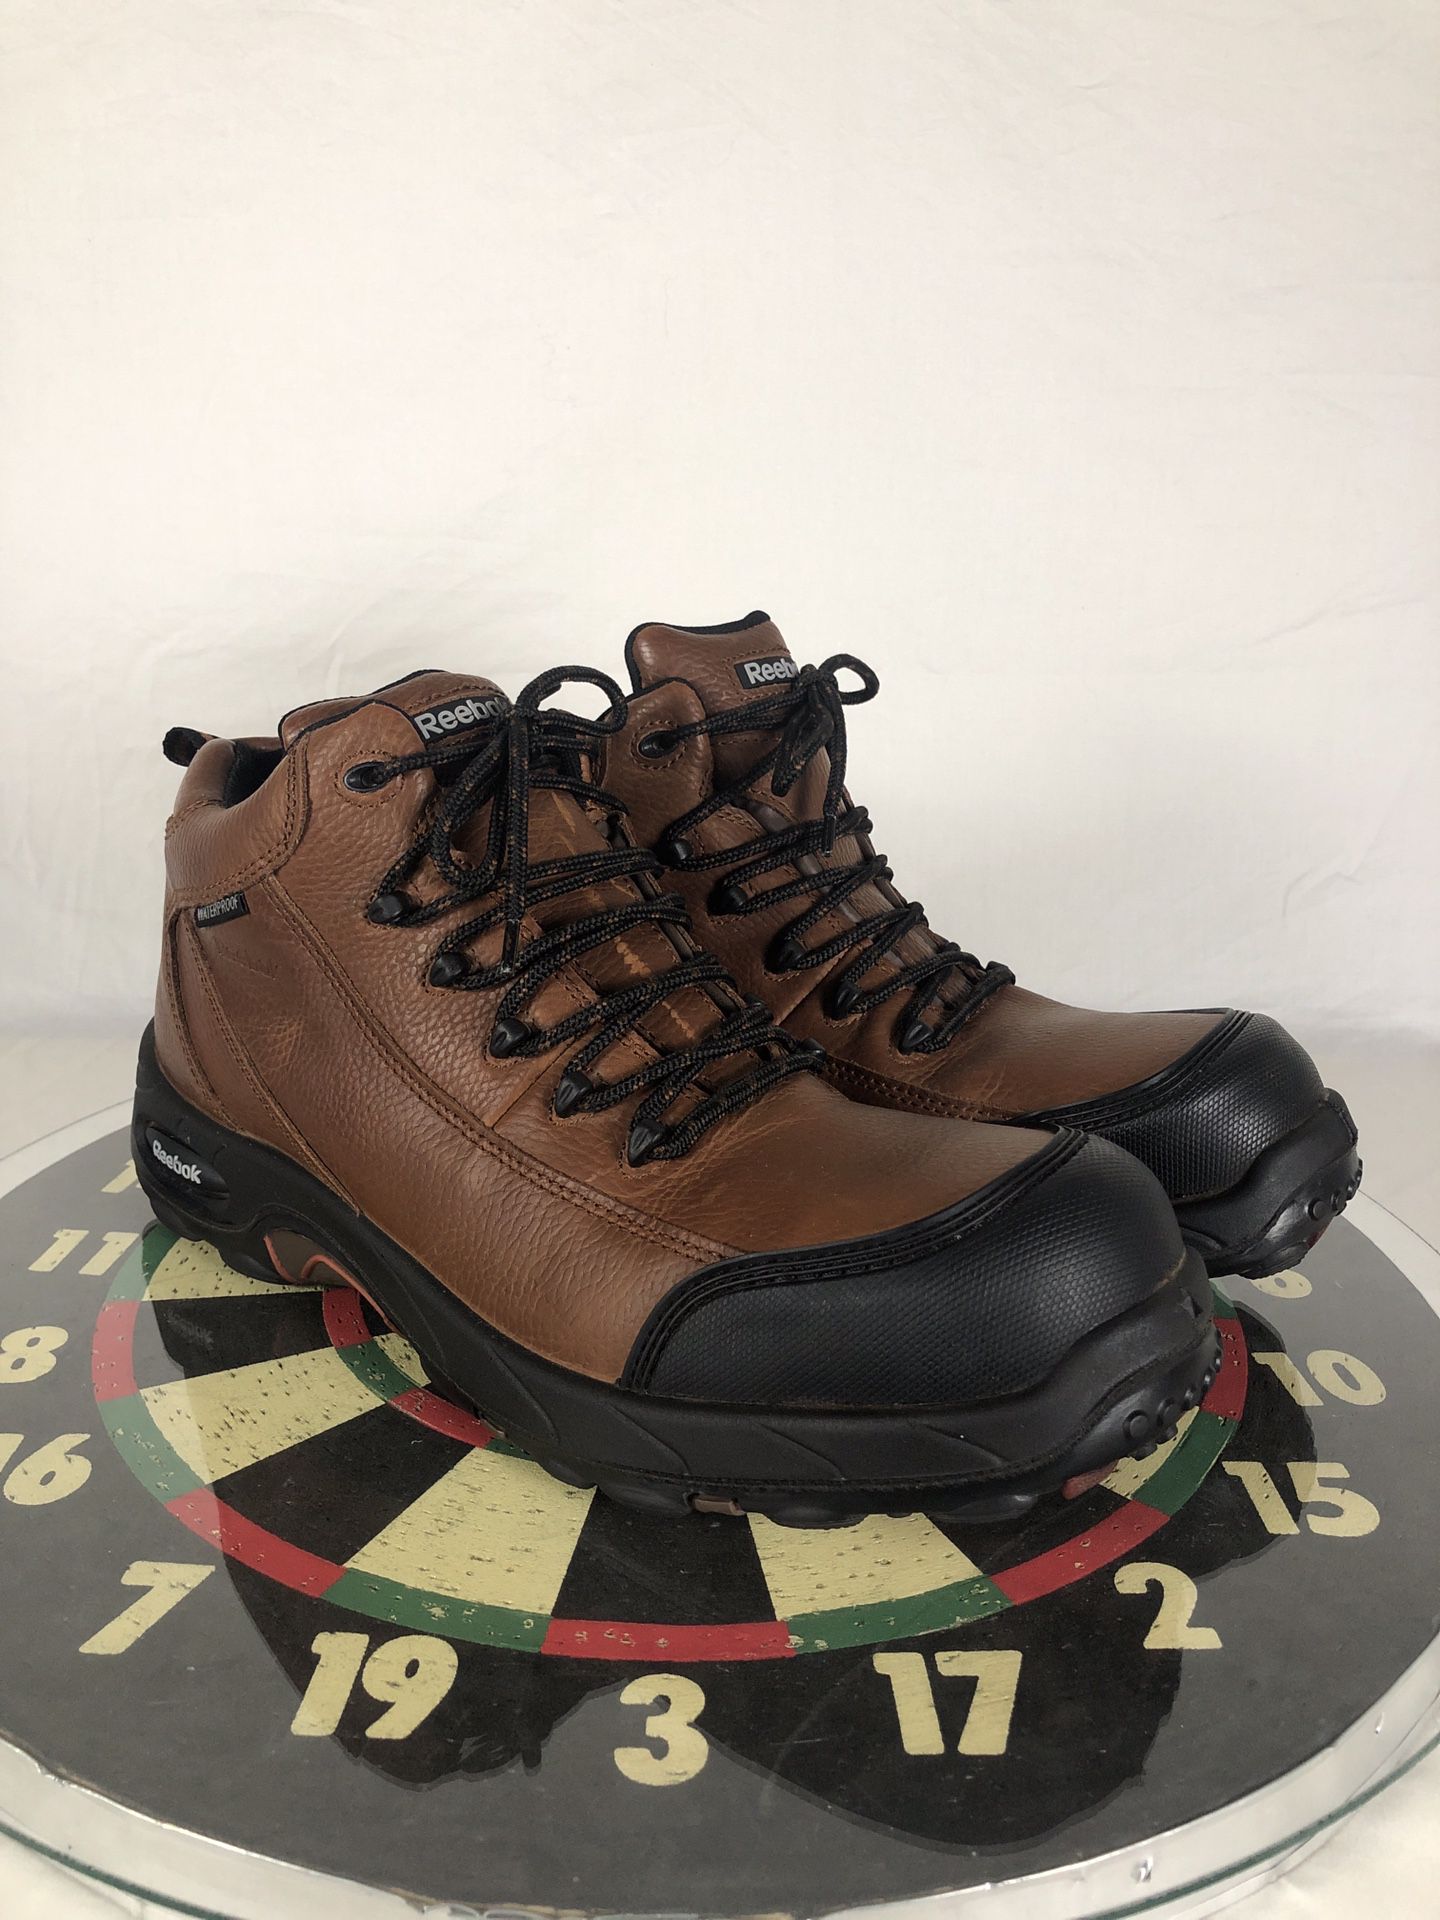 Reebok Mens Tiahawk Brown Leather Hiking Boots Shoe Composite Toe Waterproof 14W